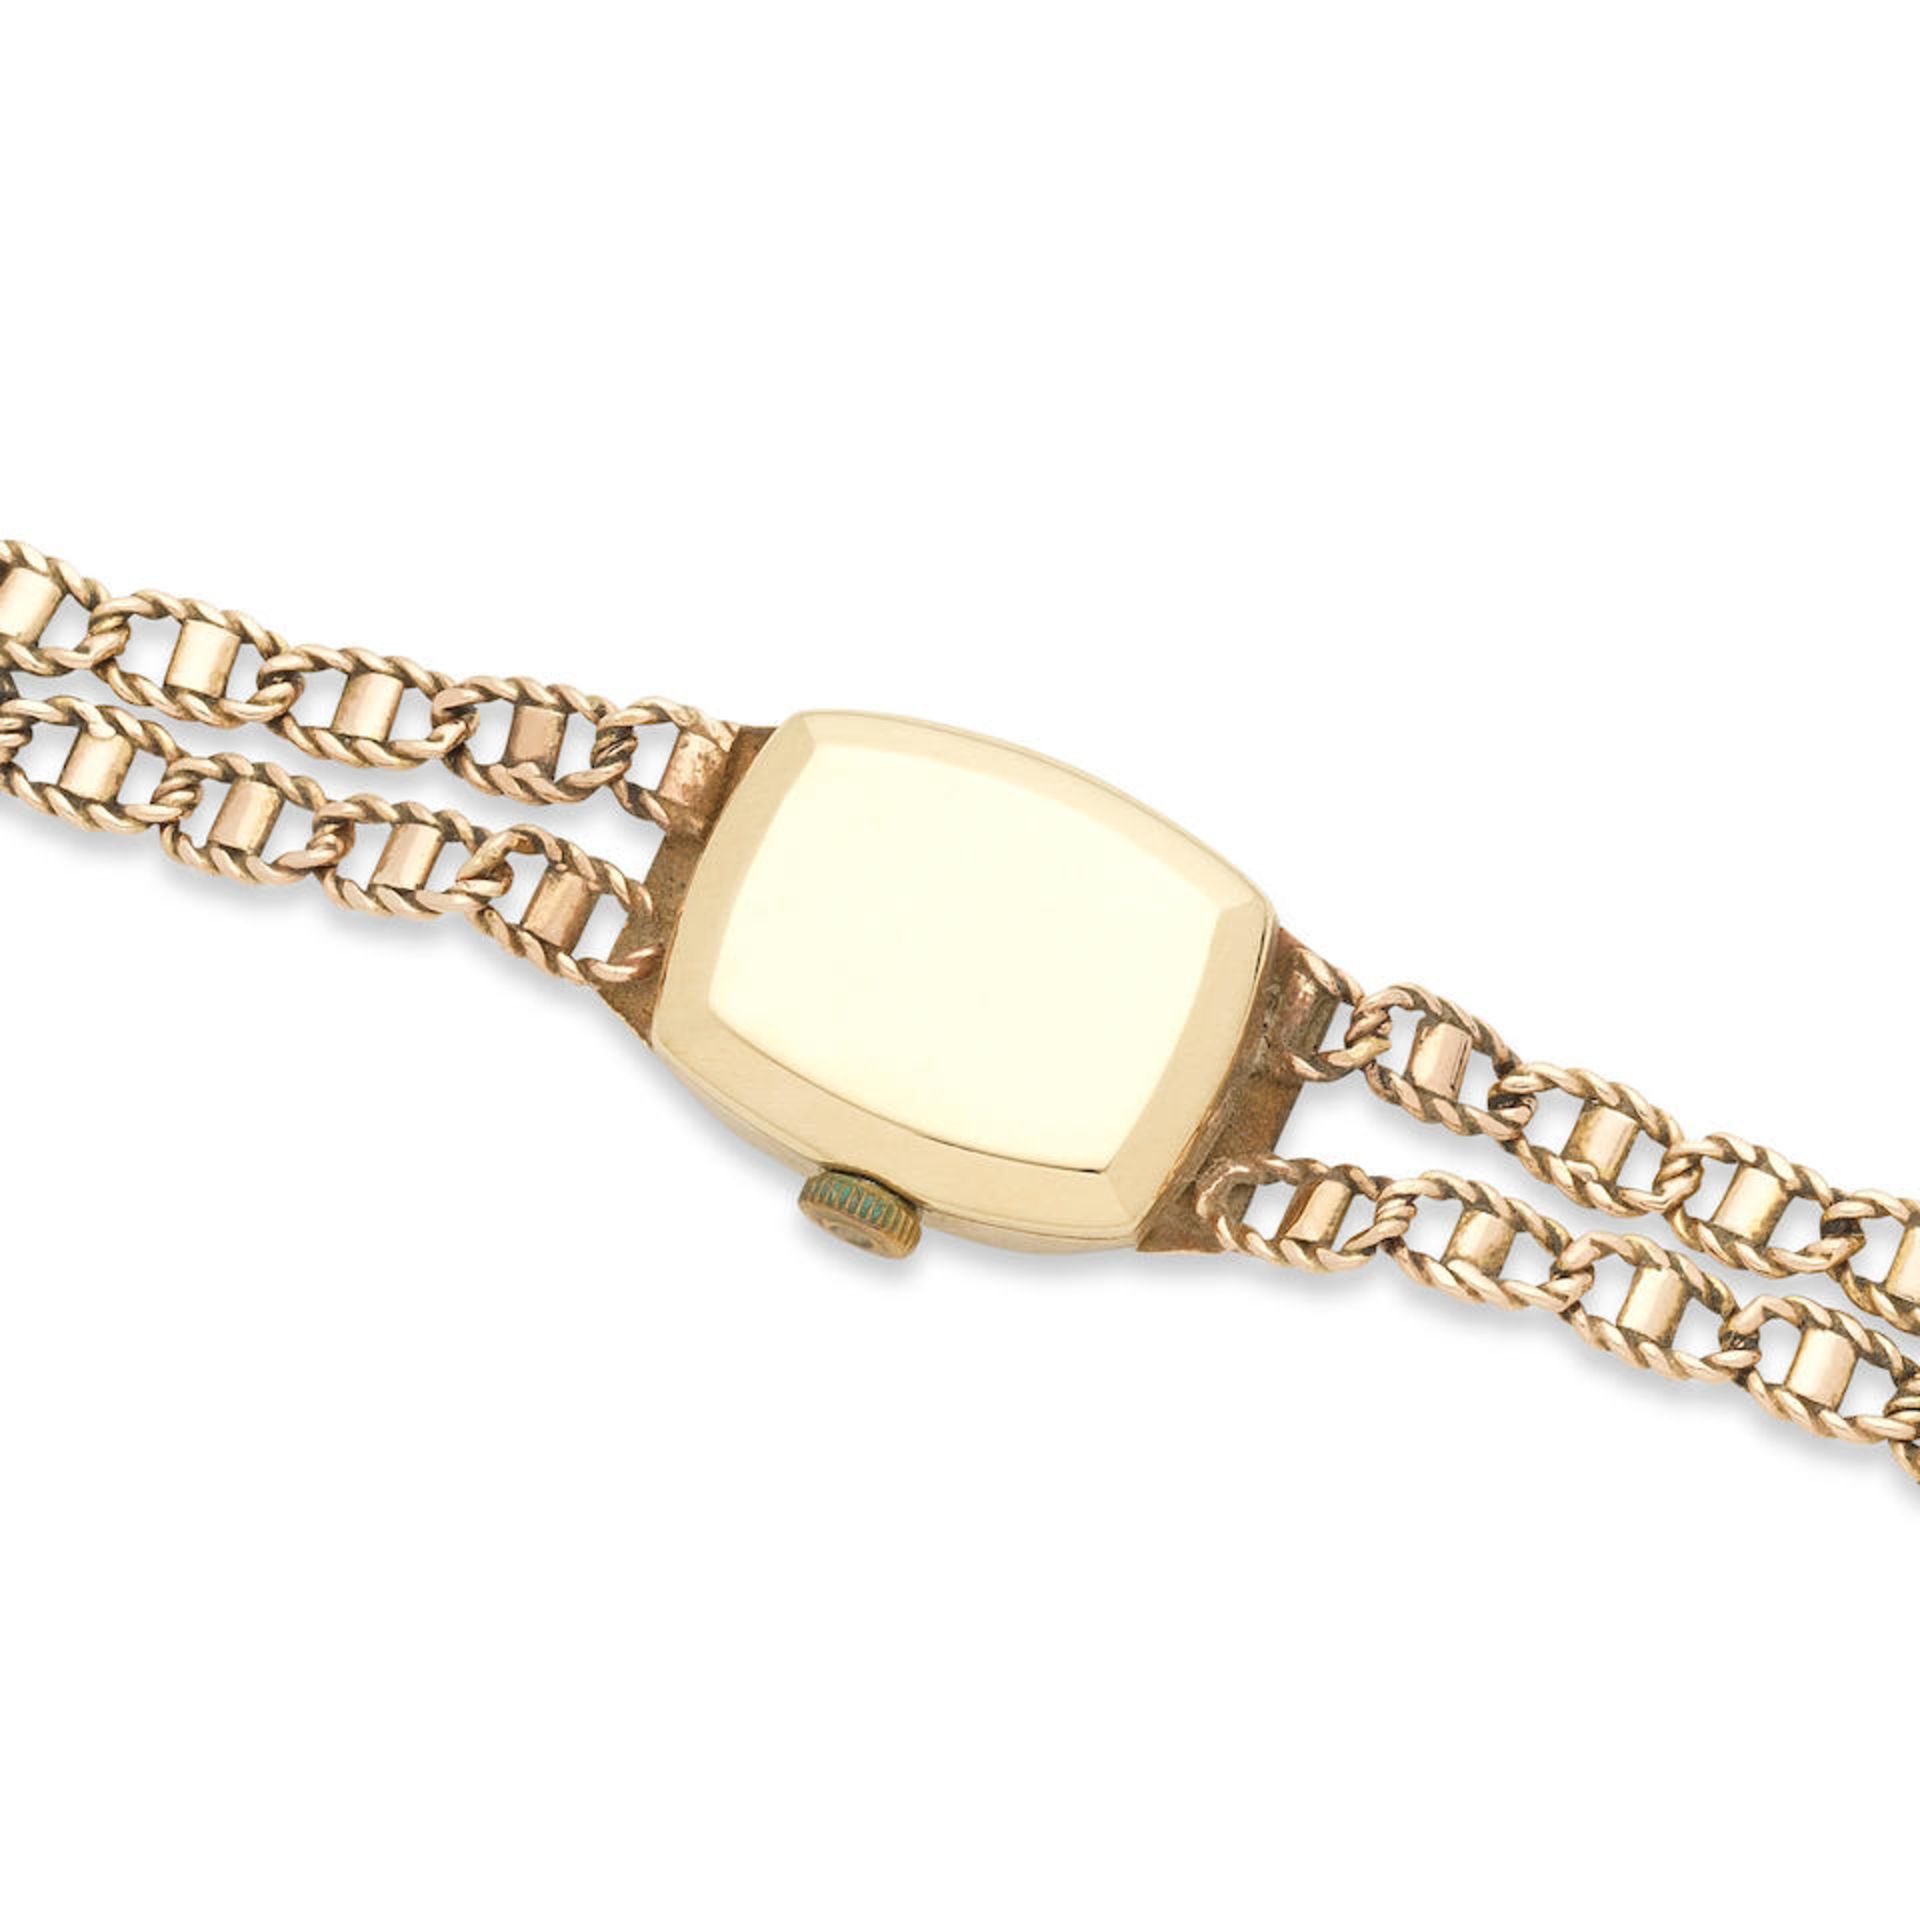 Omega. A lady's 9K gold manual wind bracelet watch Birmingham Hallmark for 1973 - Image 4 of 5